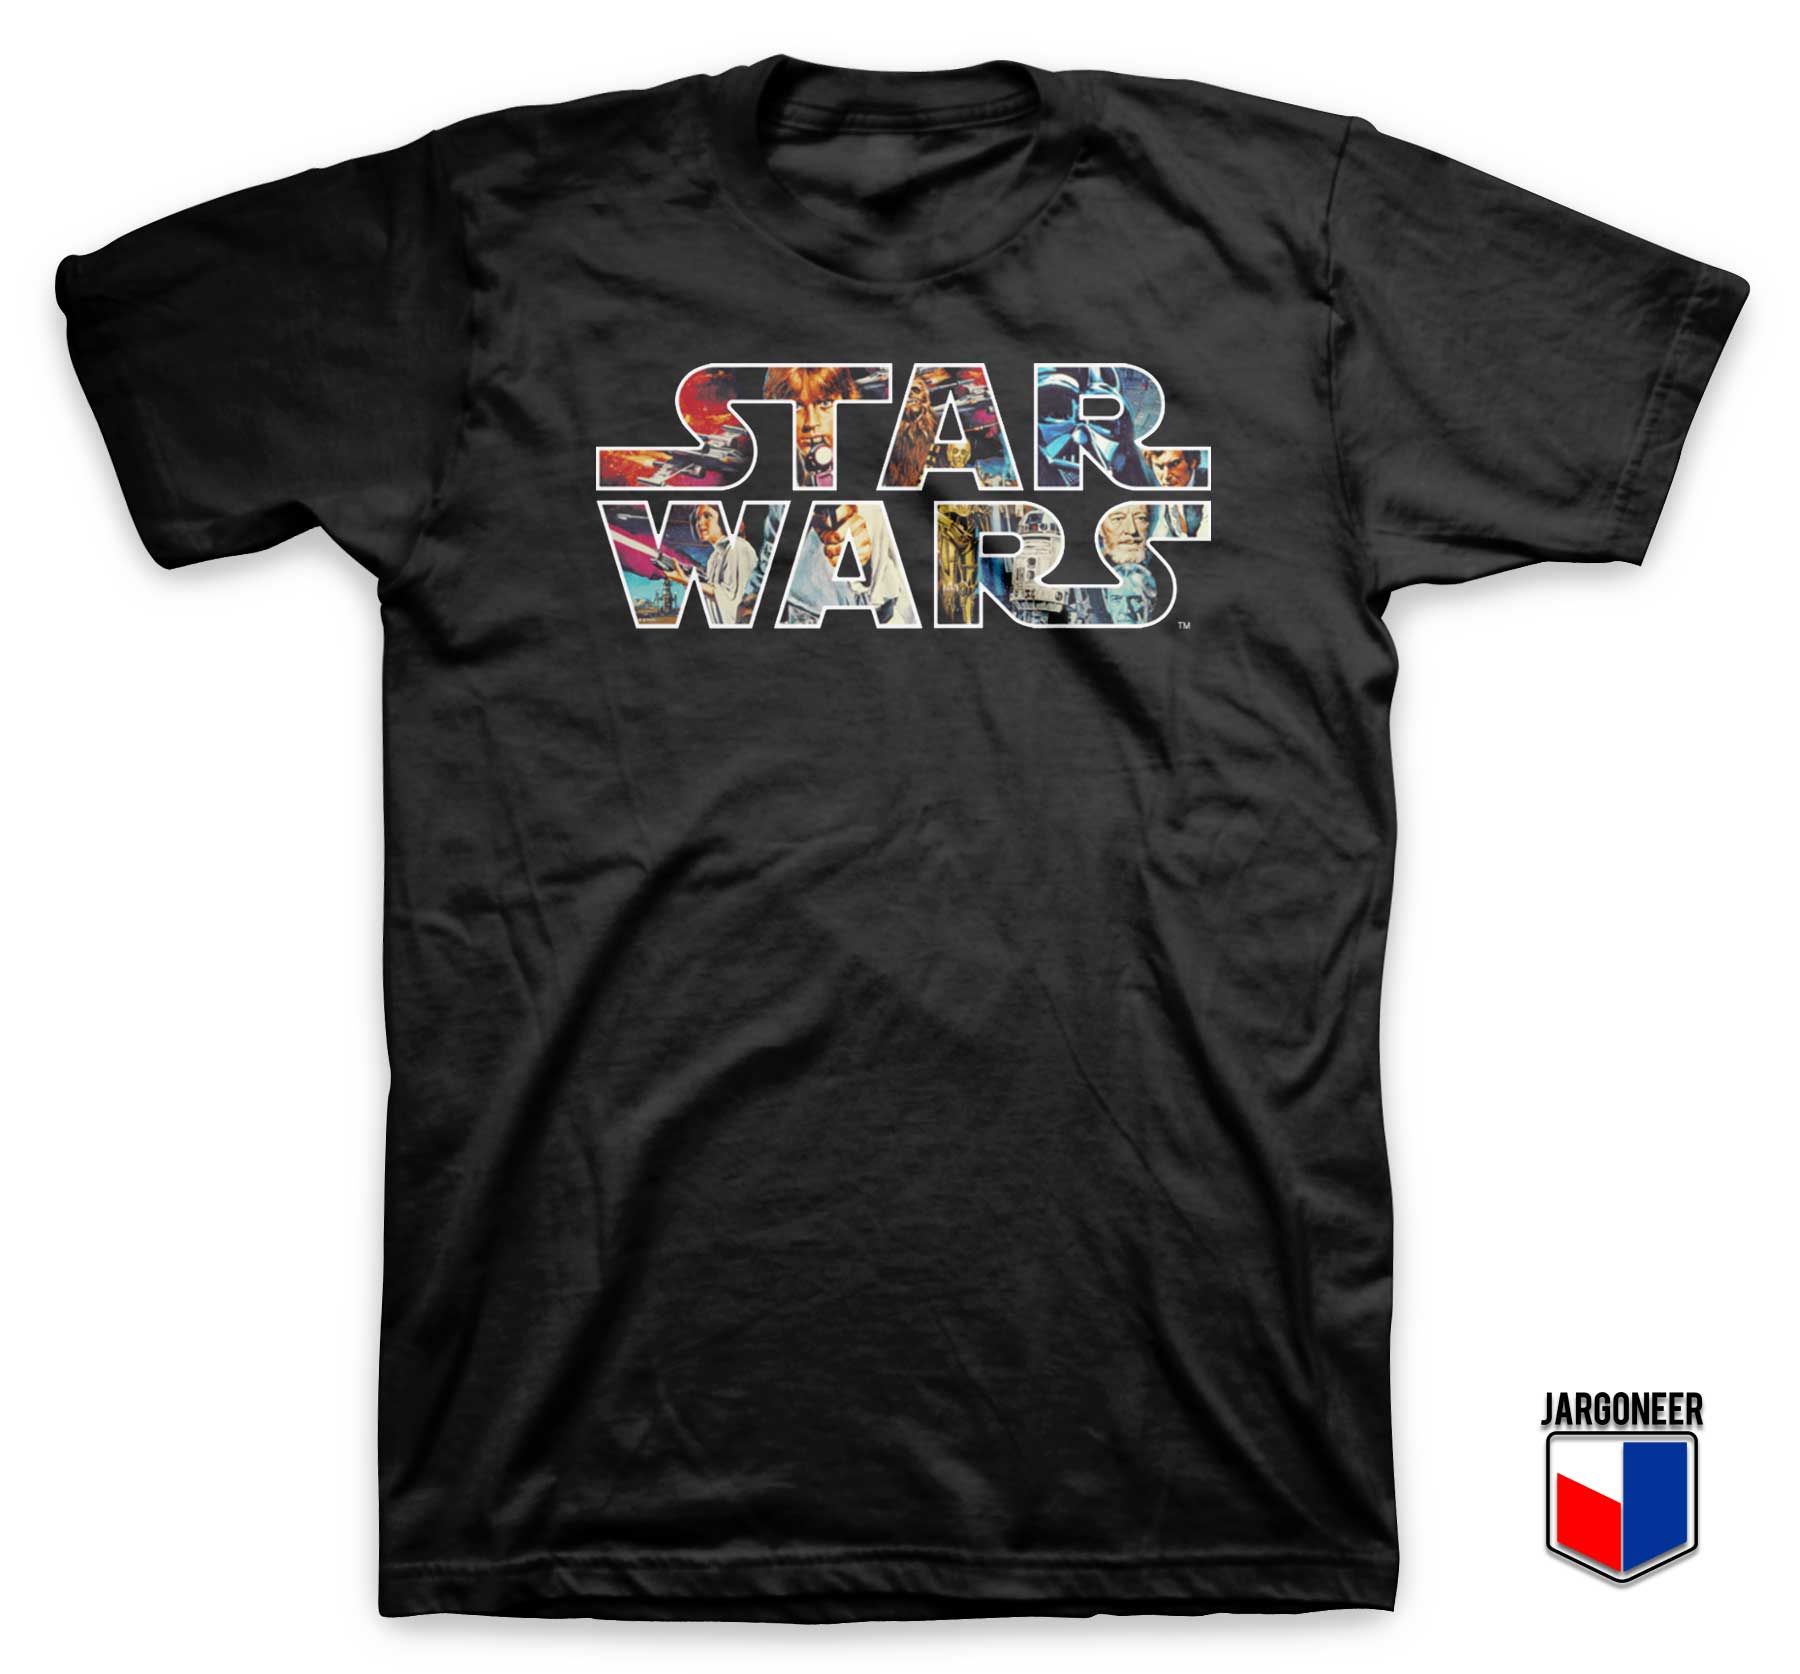 Star Wars Character Logo T Shirt - Shop Unique Graphic Cool Shirt Designs